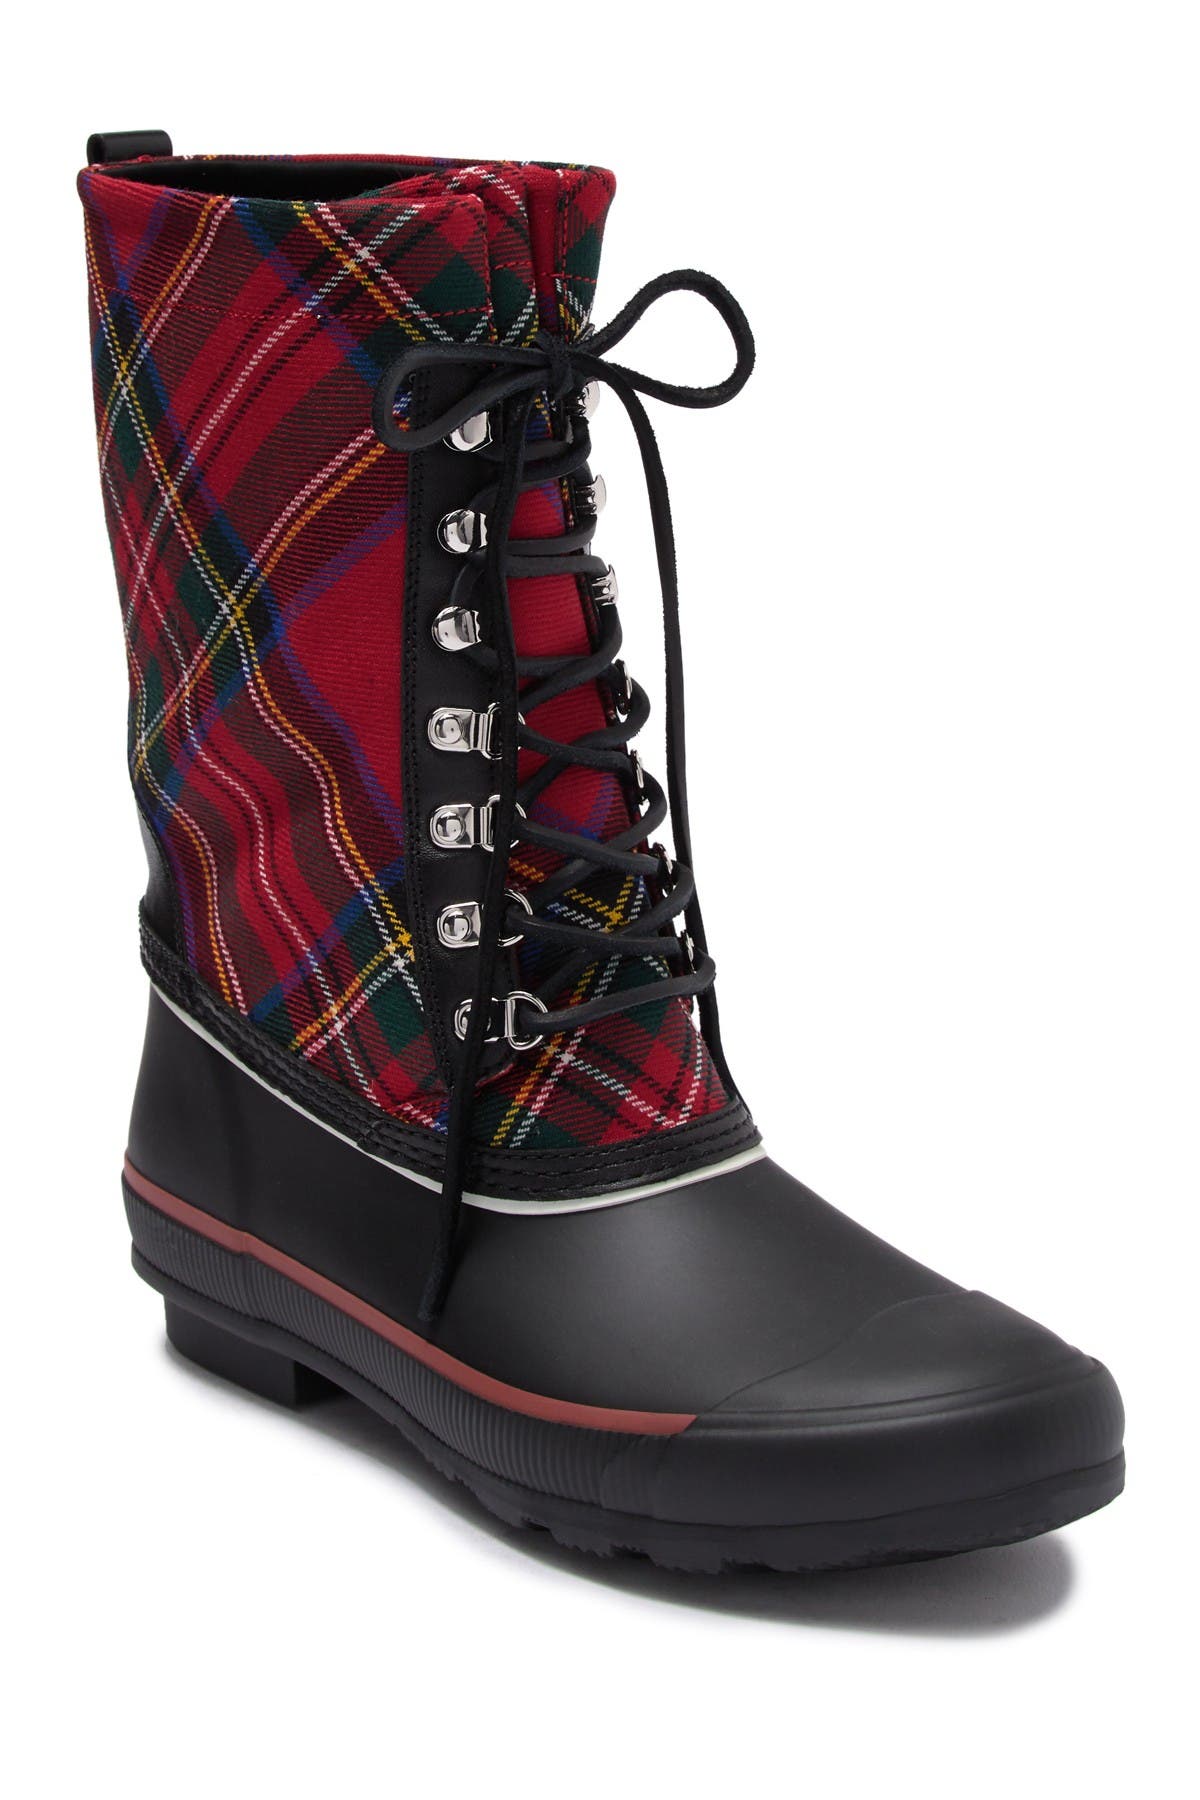 burberry rain boots nordstrom rack